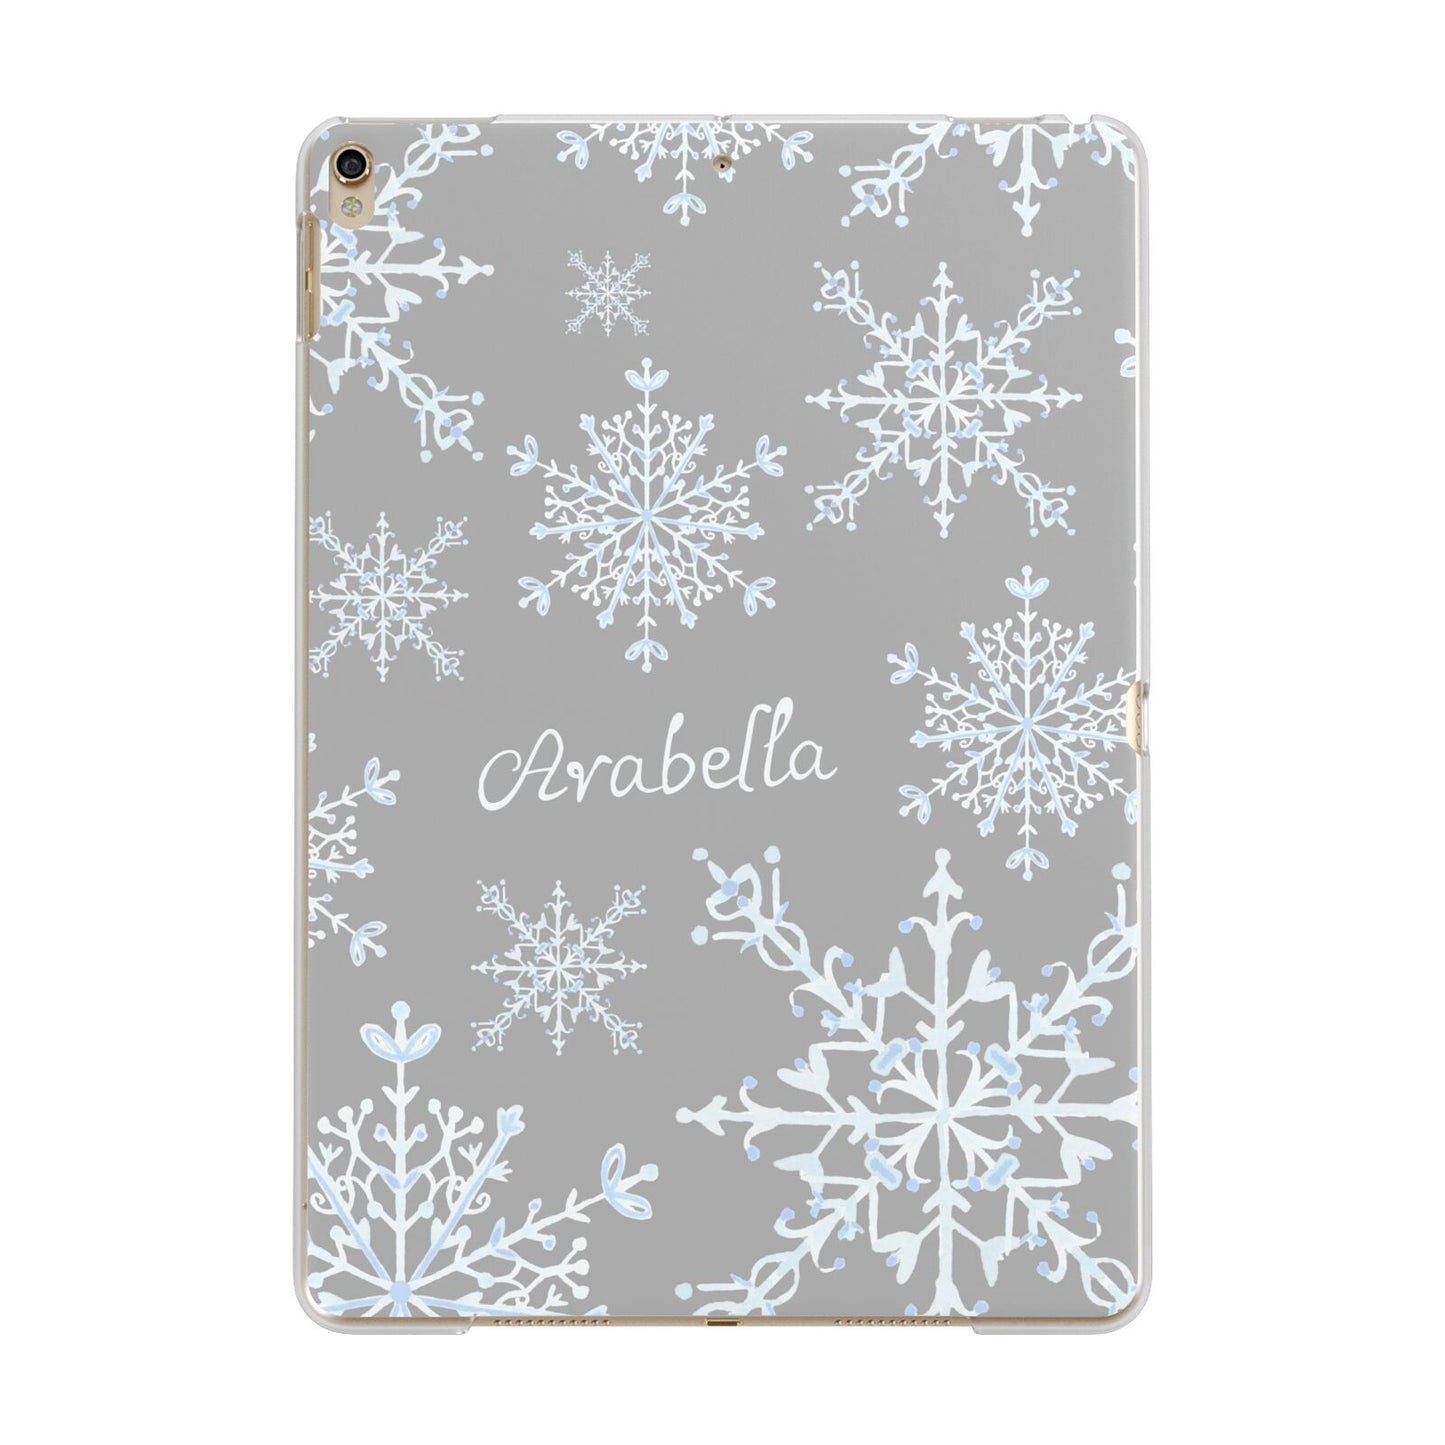 Personalised Snowflake Apple iPad Gold Case